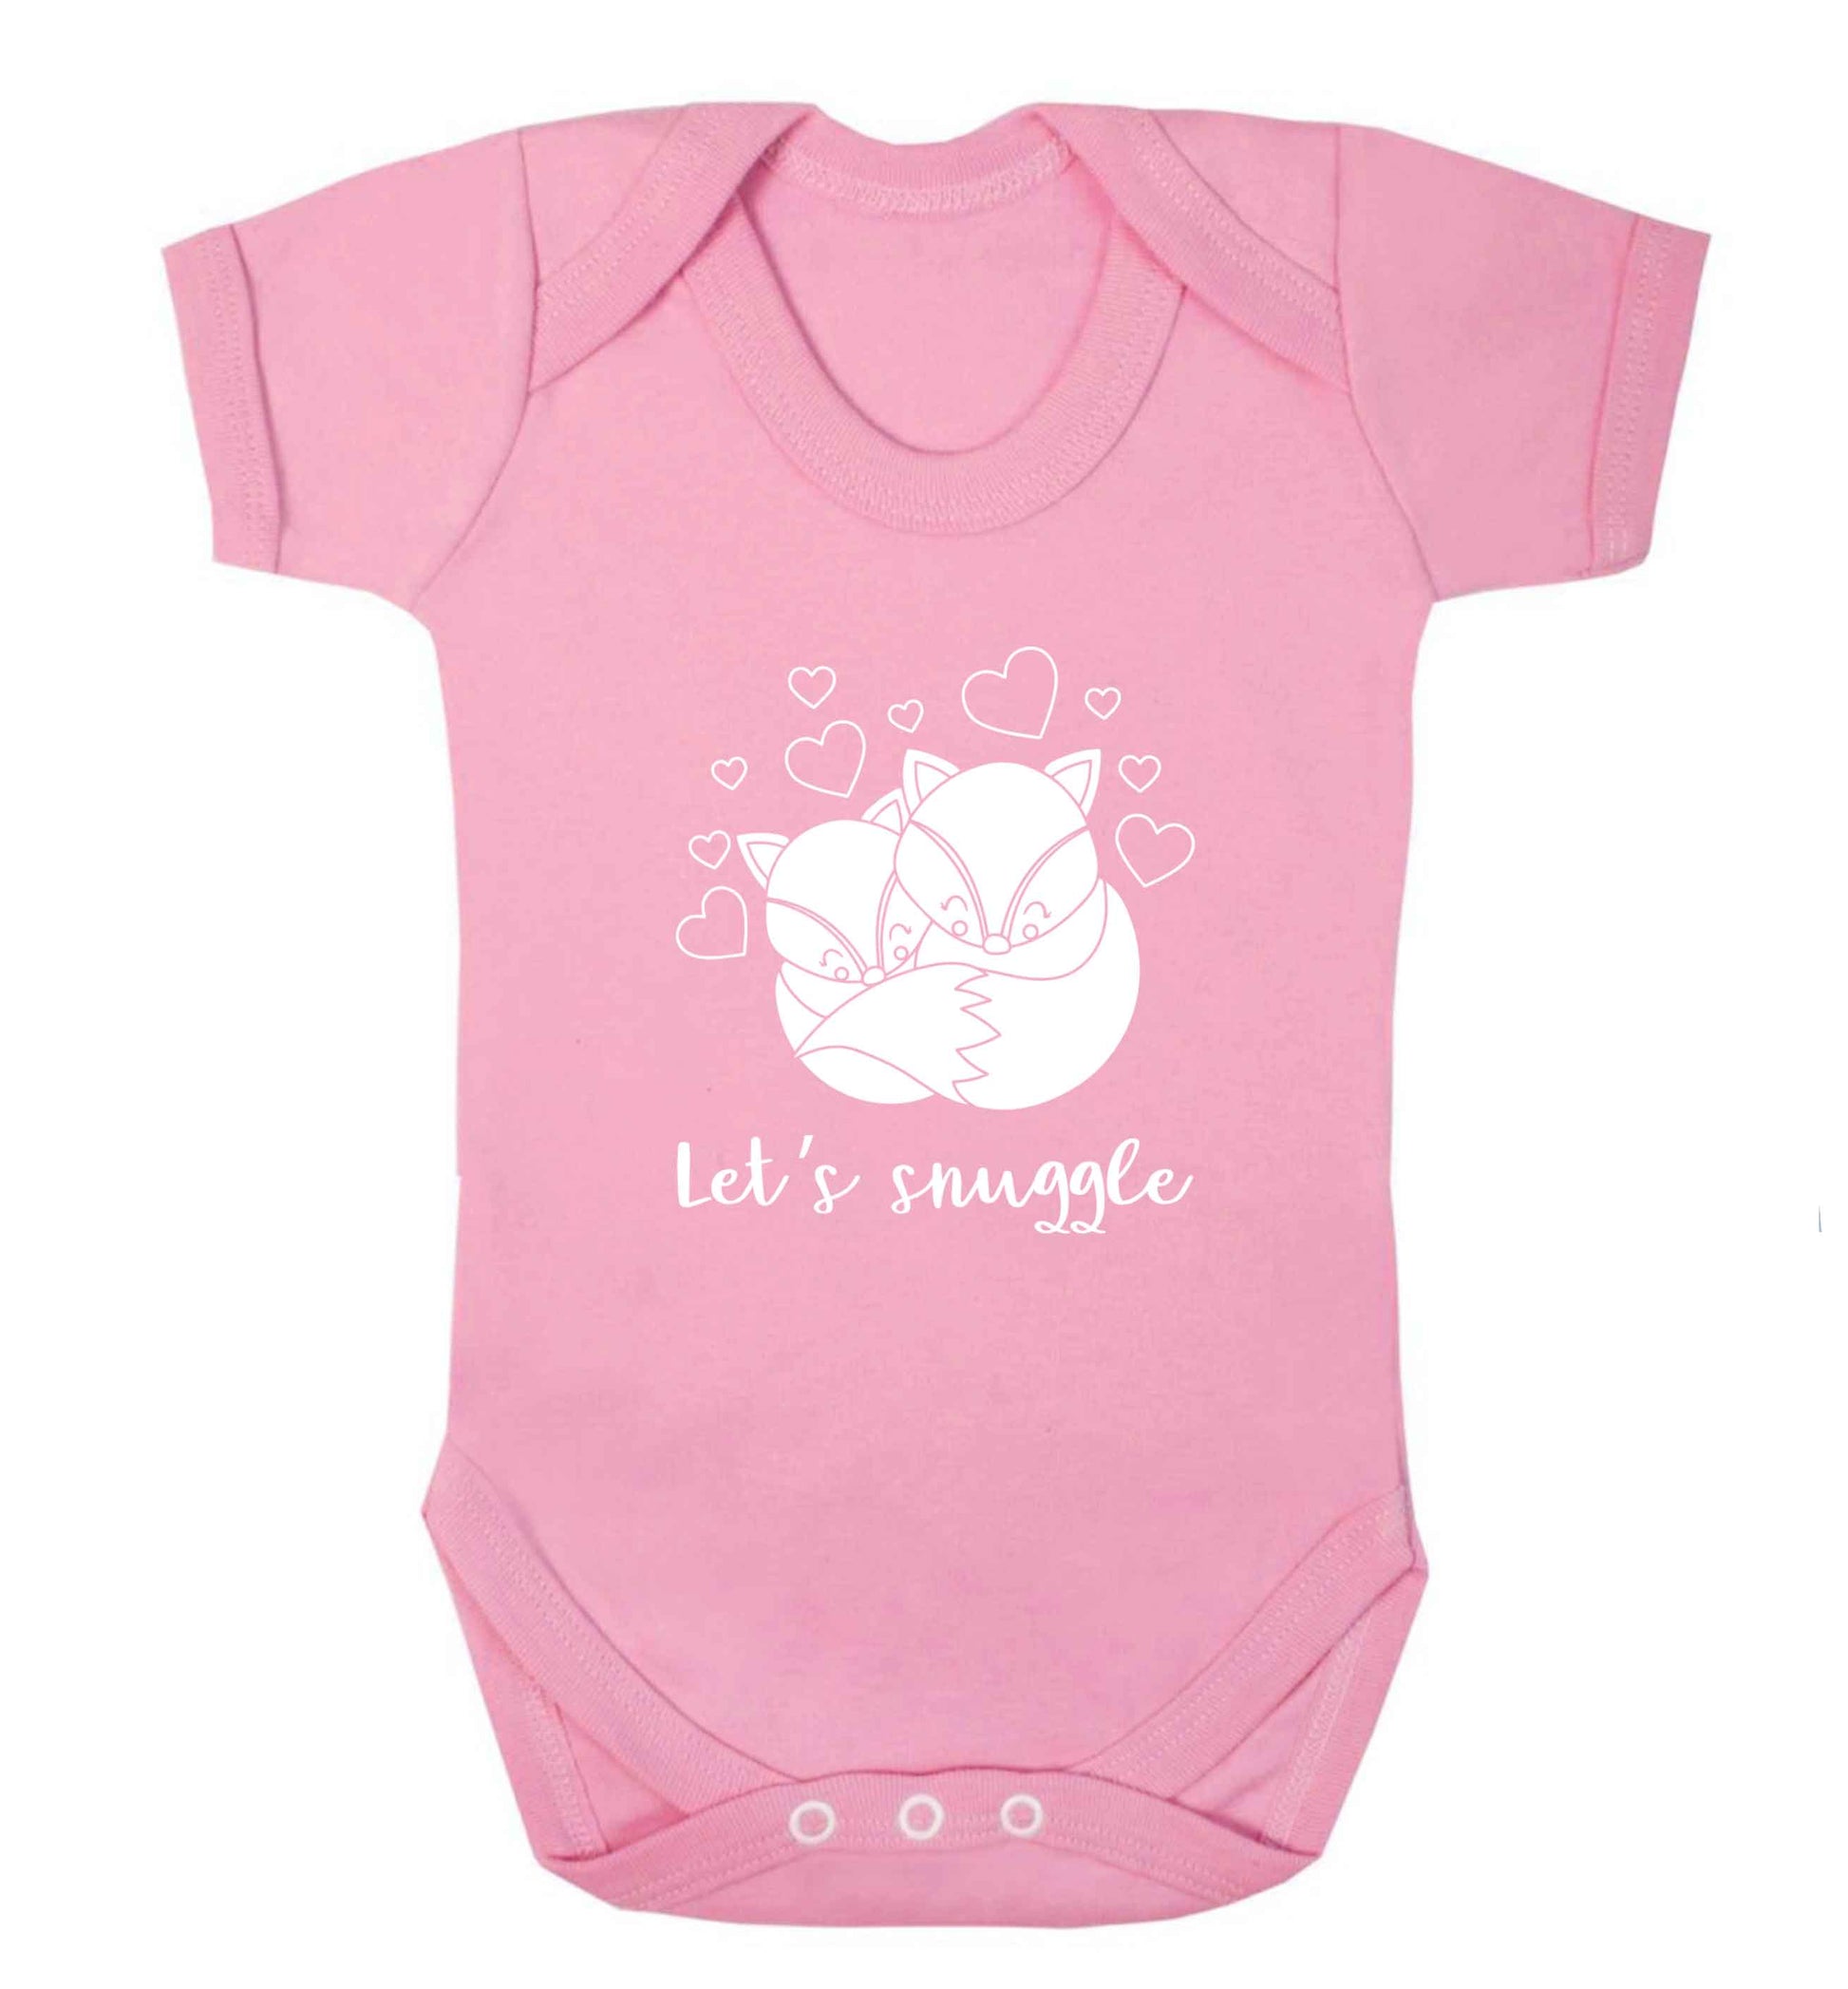 Let's snuggle baby vest pale pink 18-24 months